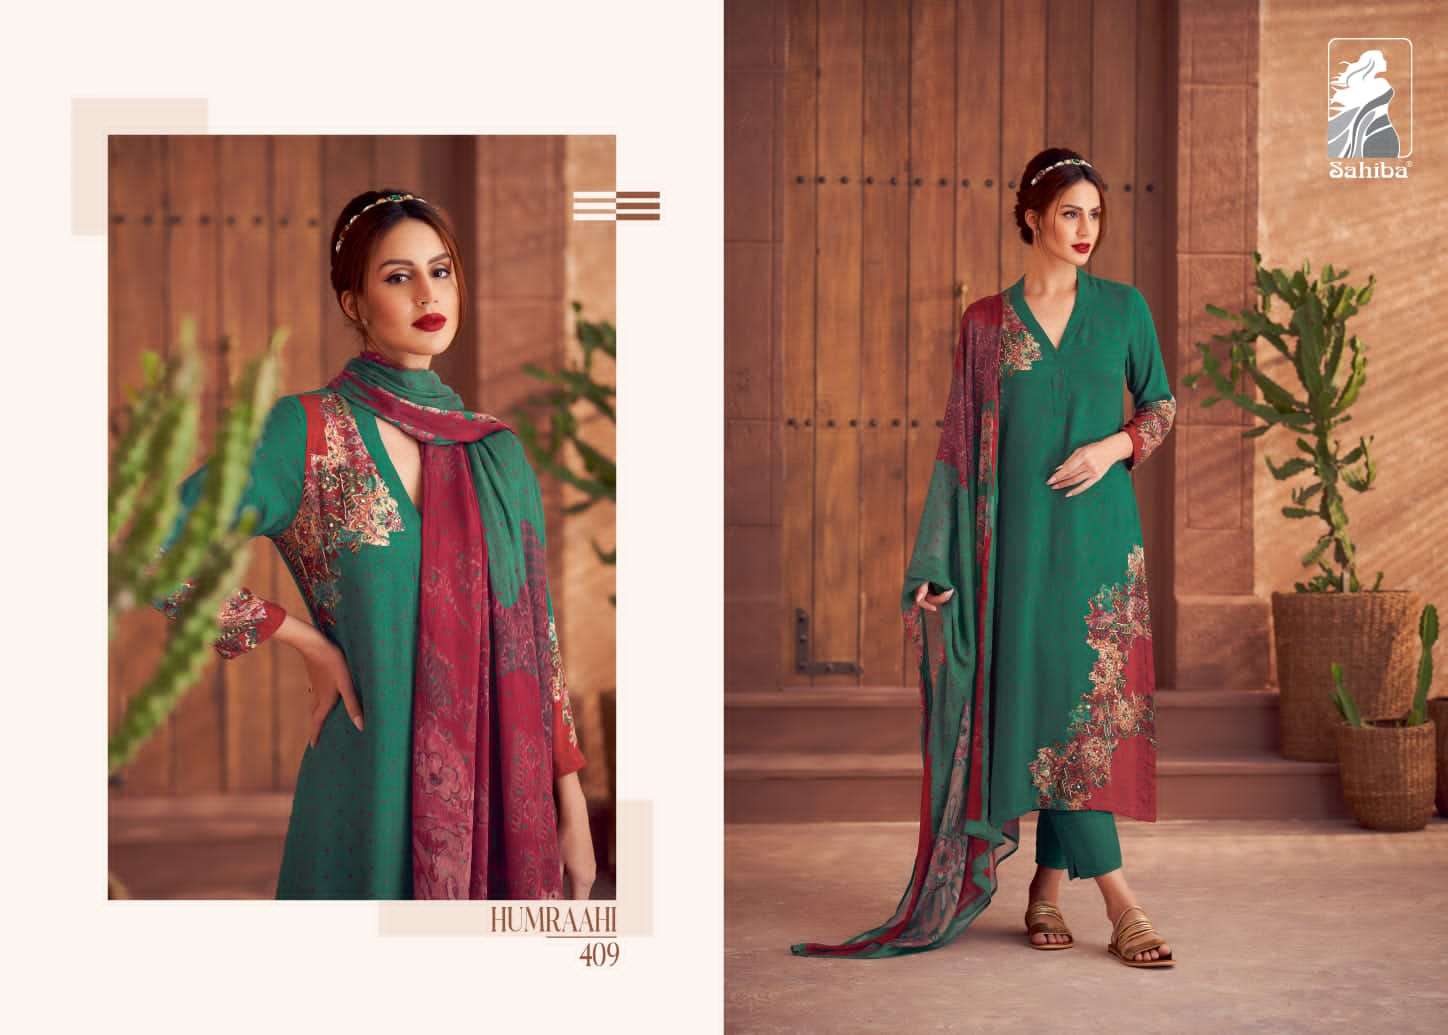 sahiba humraahi series designer latest pakistani salwar kameez wholesaler surat gujarat